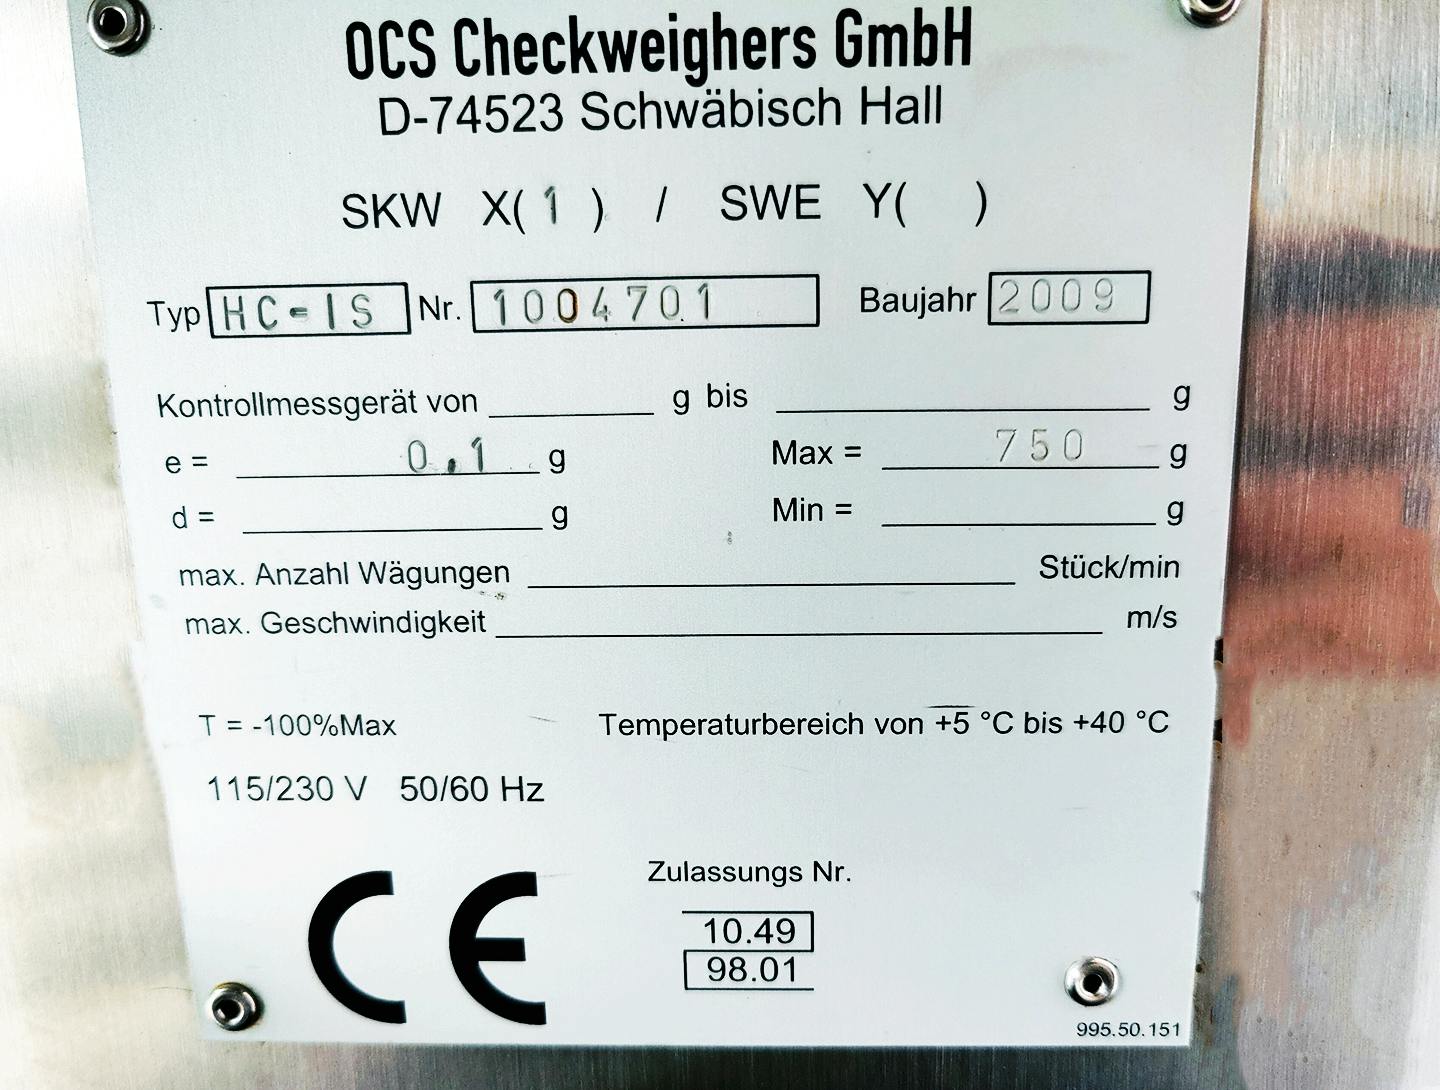 OCS Checkweighers HC-IS - Trasporti diversi - image 10